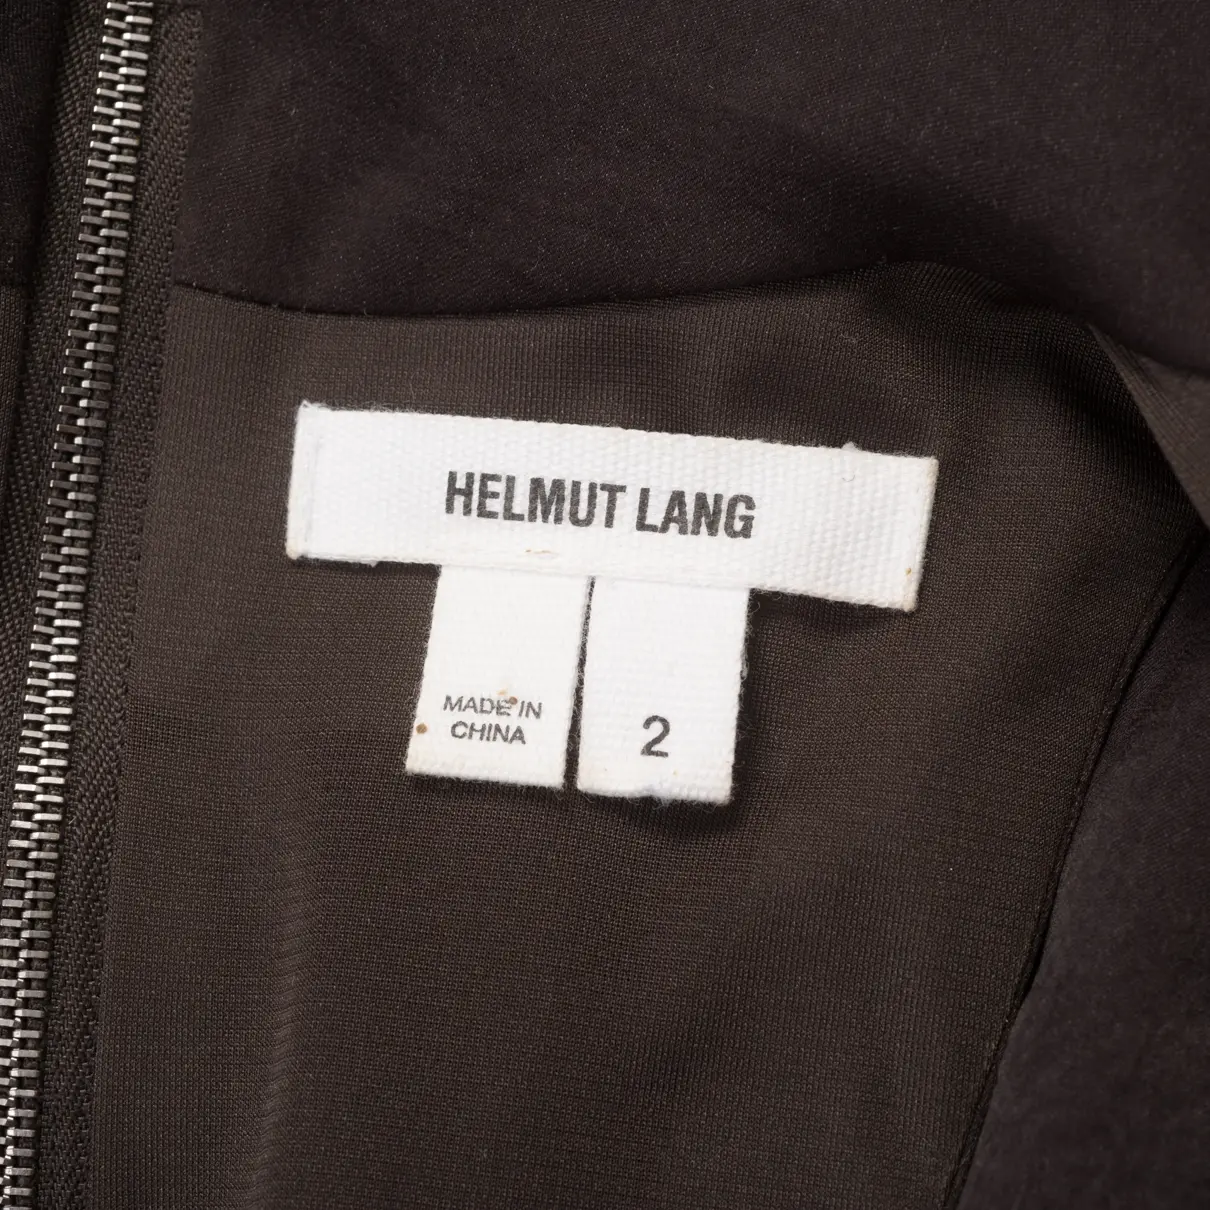 Buy Helmut Lang Silk dress online